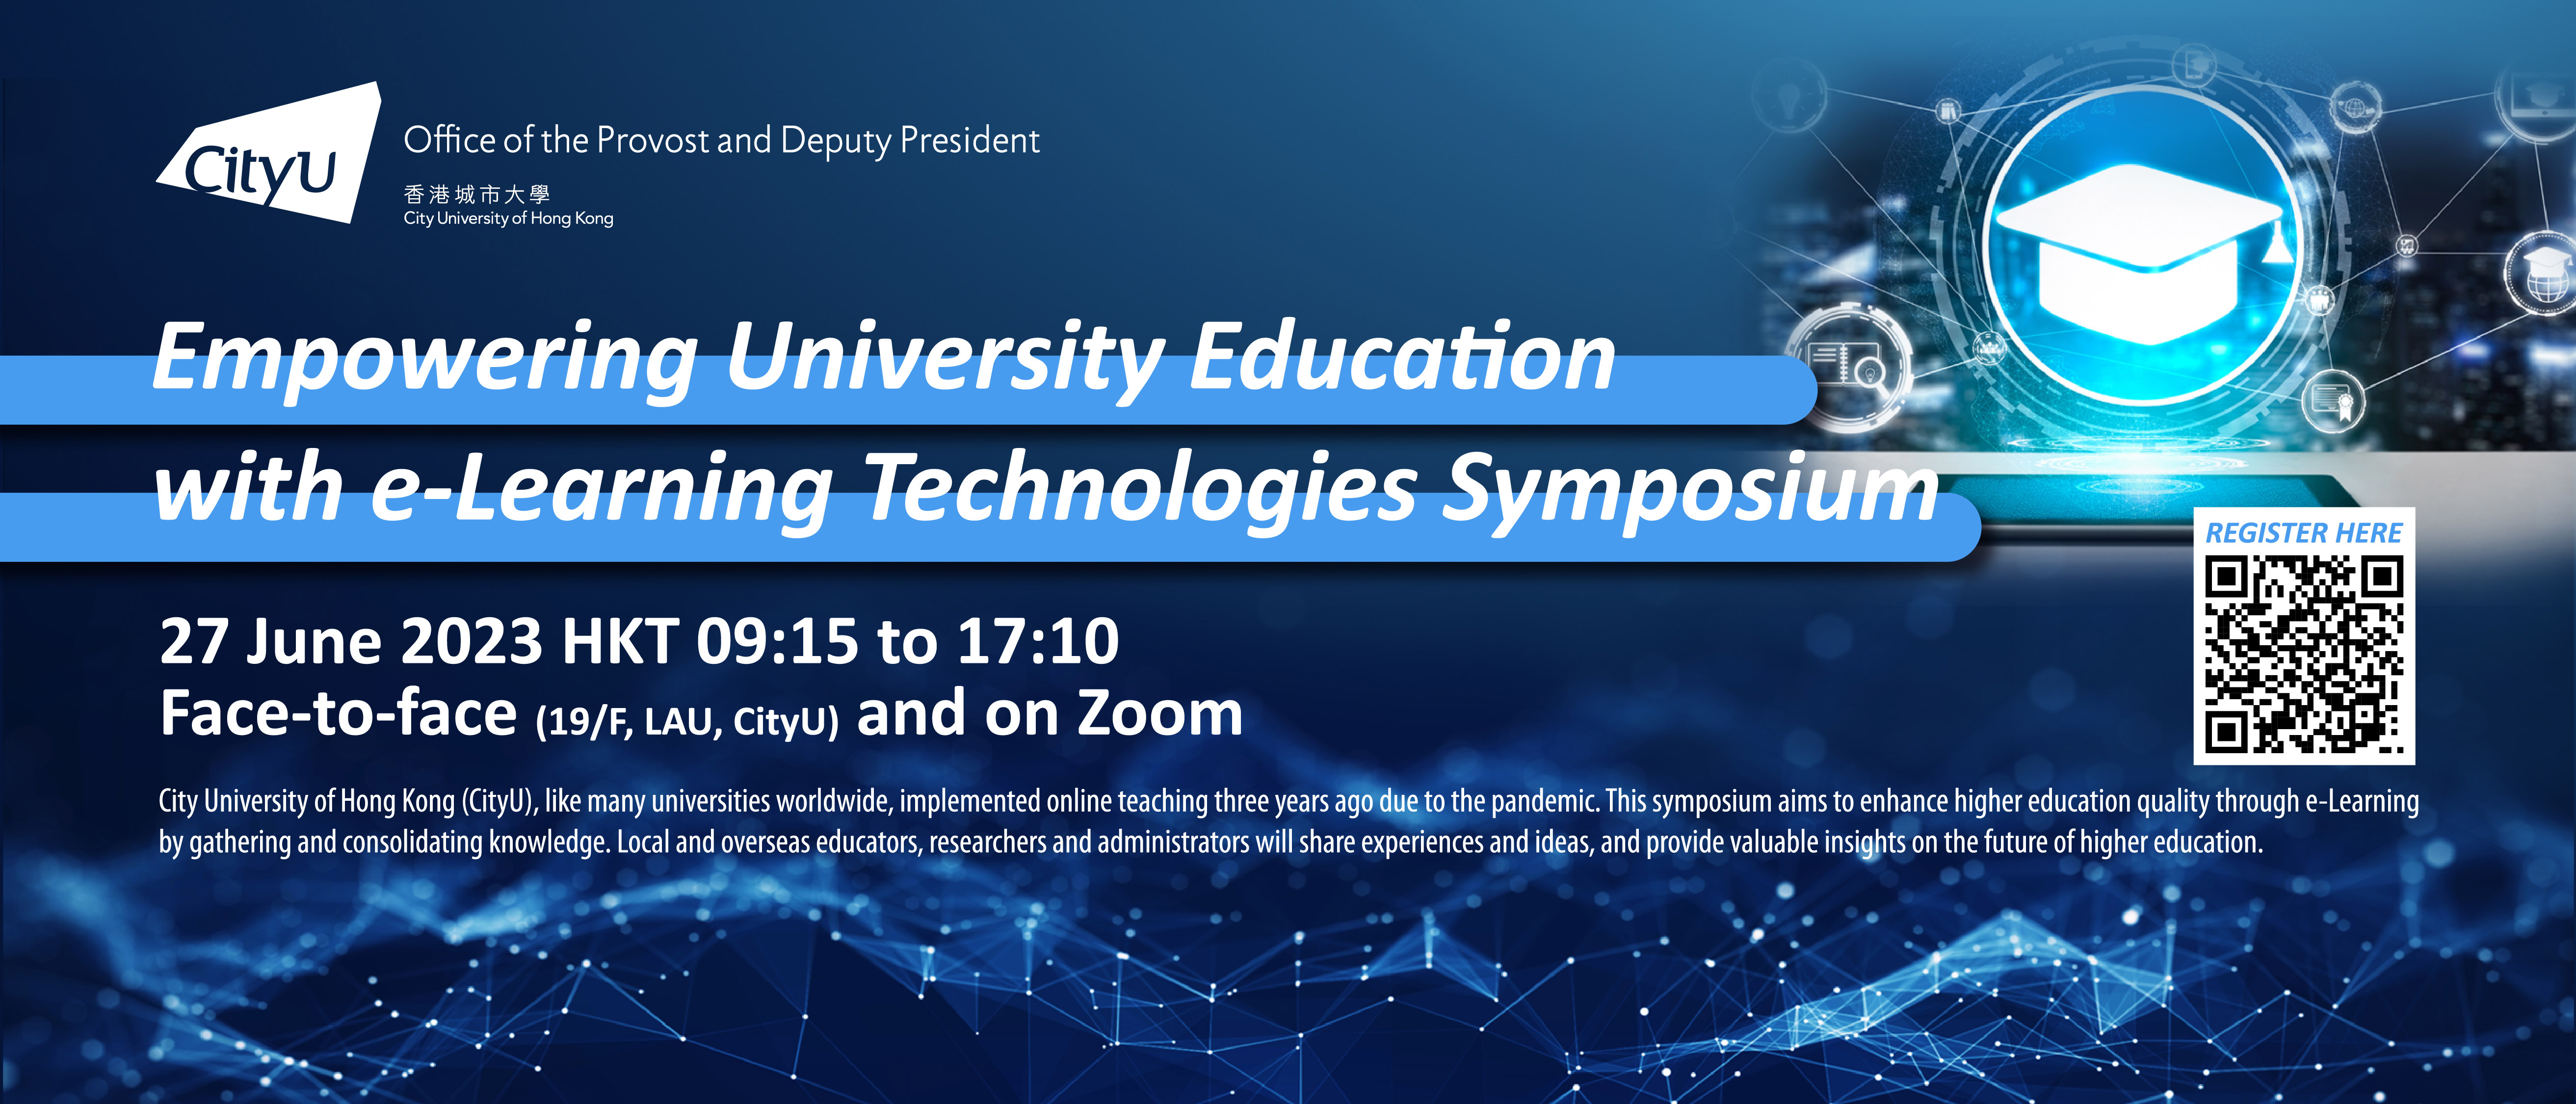 Empowering University Education with e-Learning Technologies Symposium